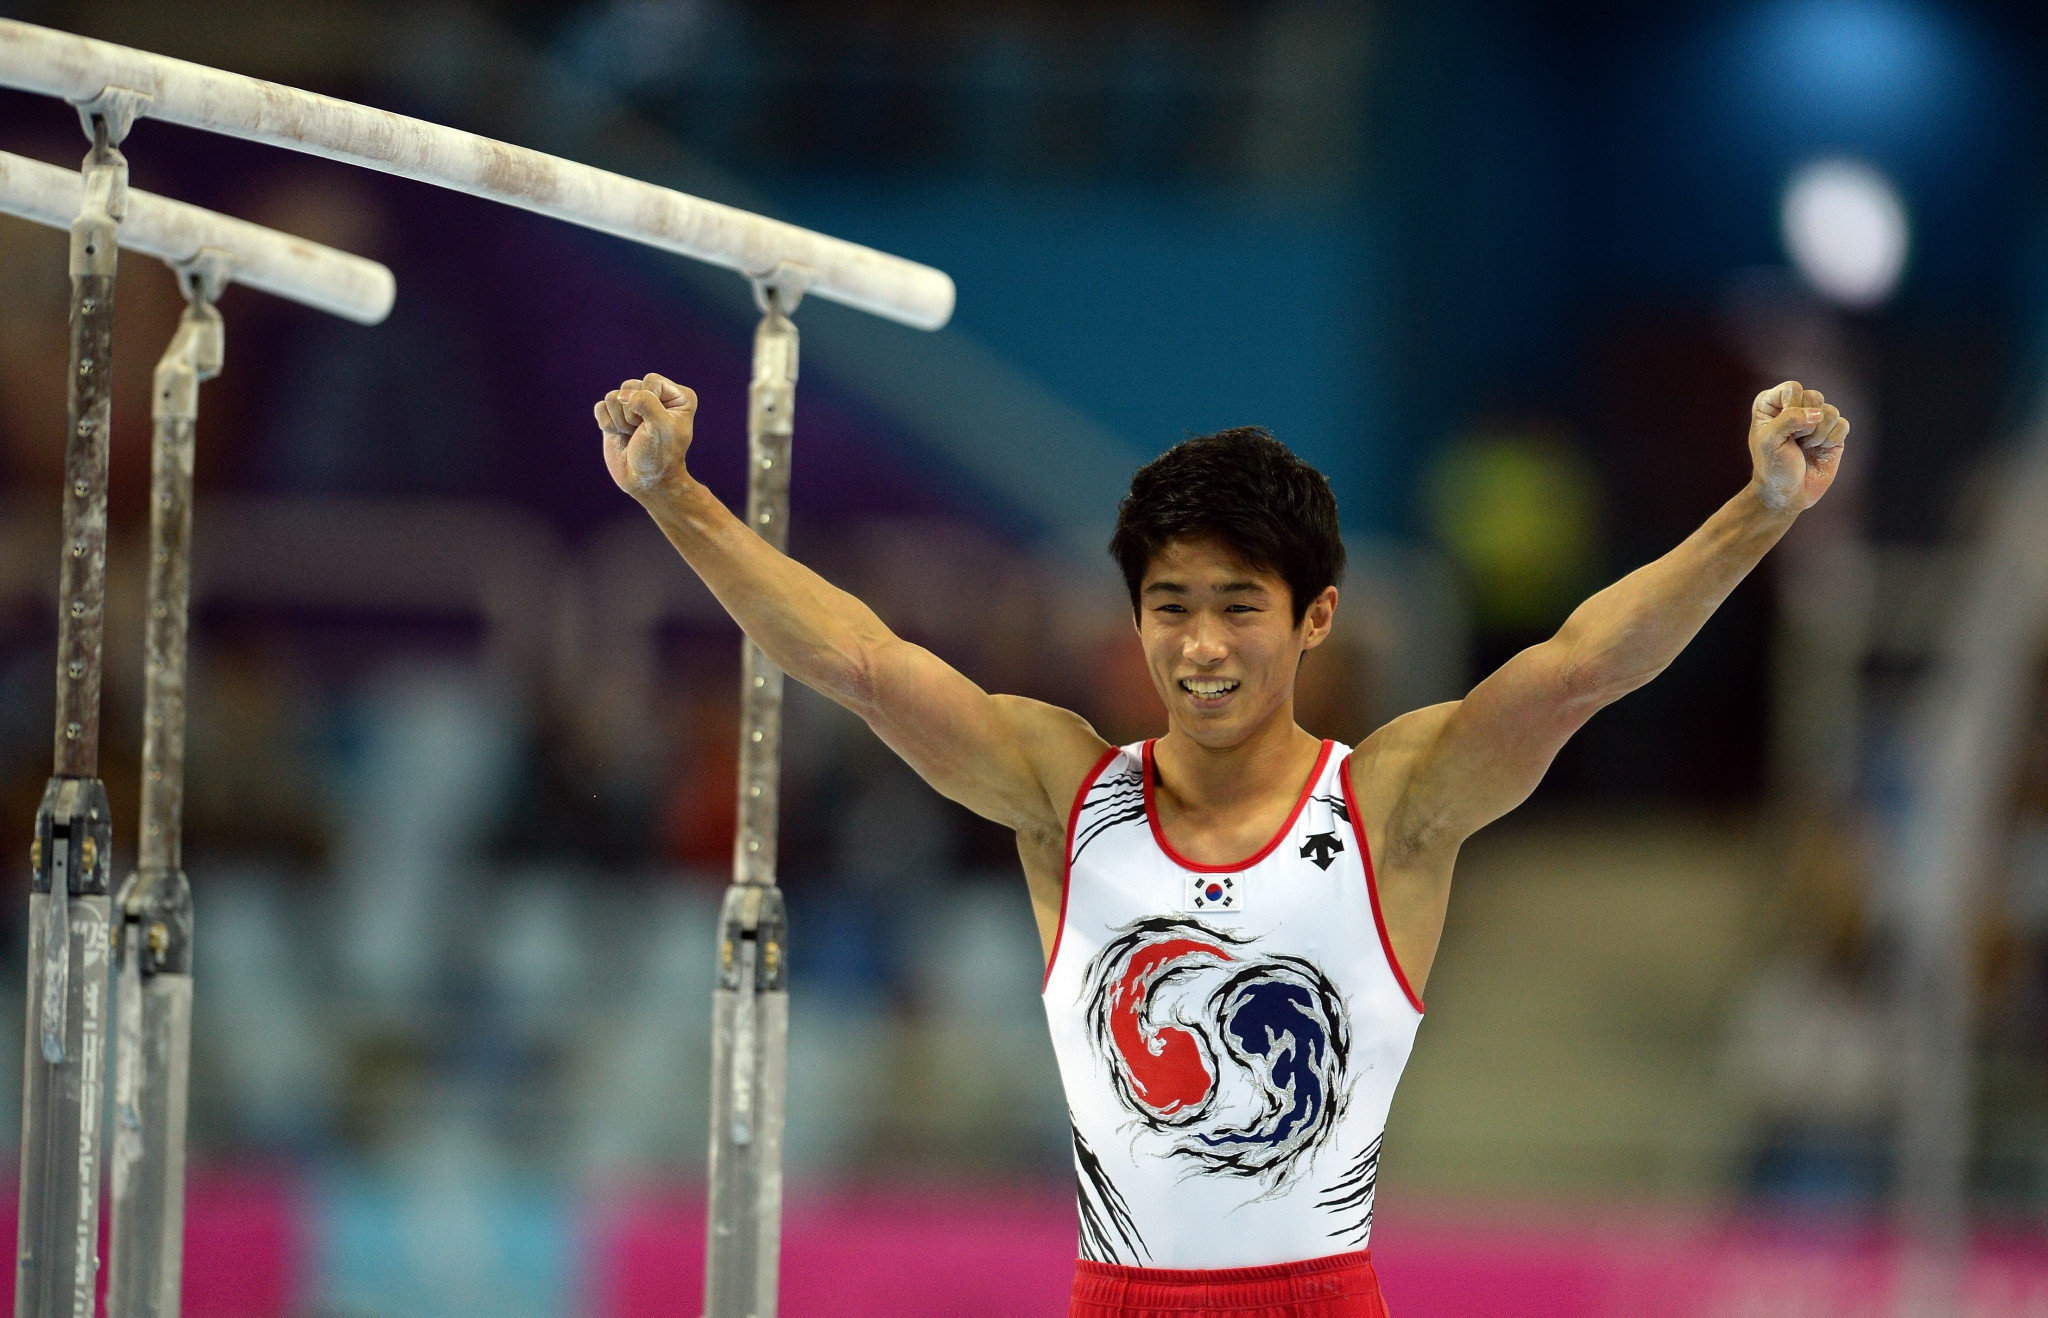 London 2012 men's vault Olympic champion Yang Hak-seon expressed frustration at the postponement of Tokyo 2020 ©Getty Images